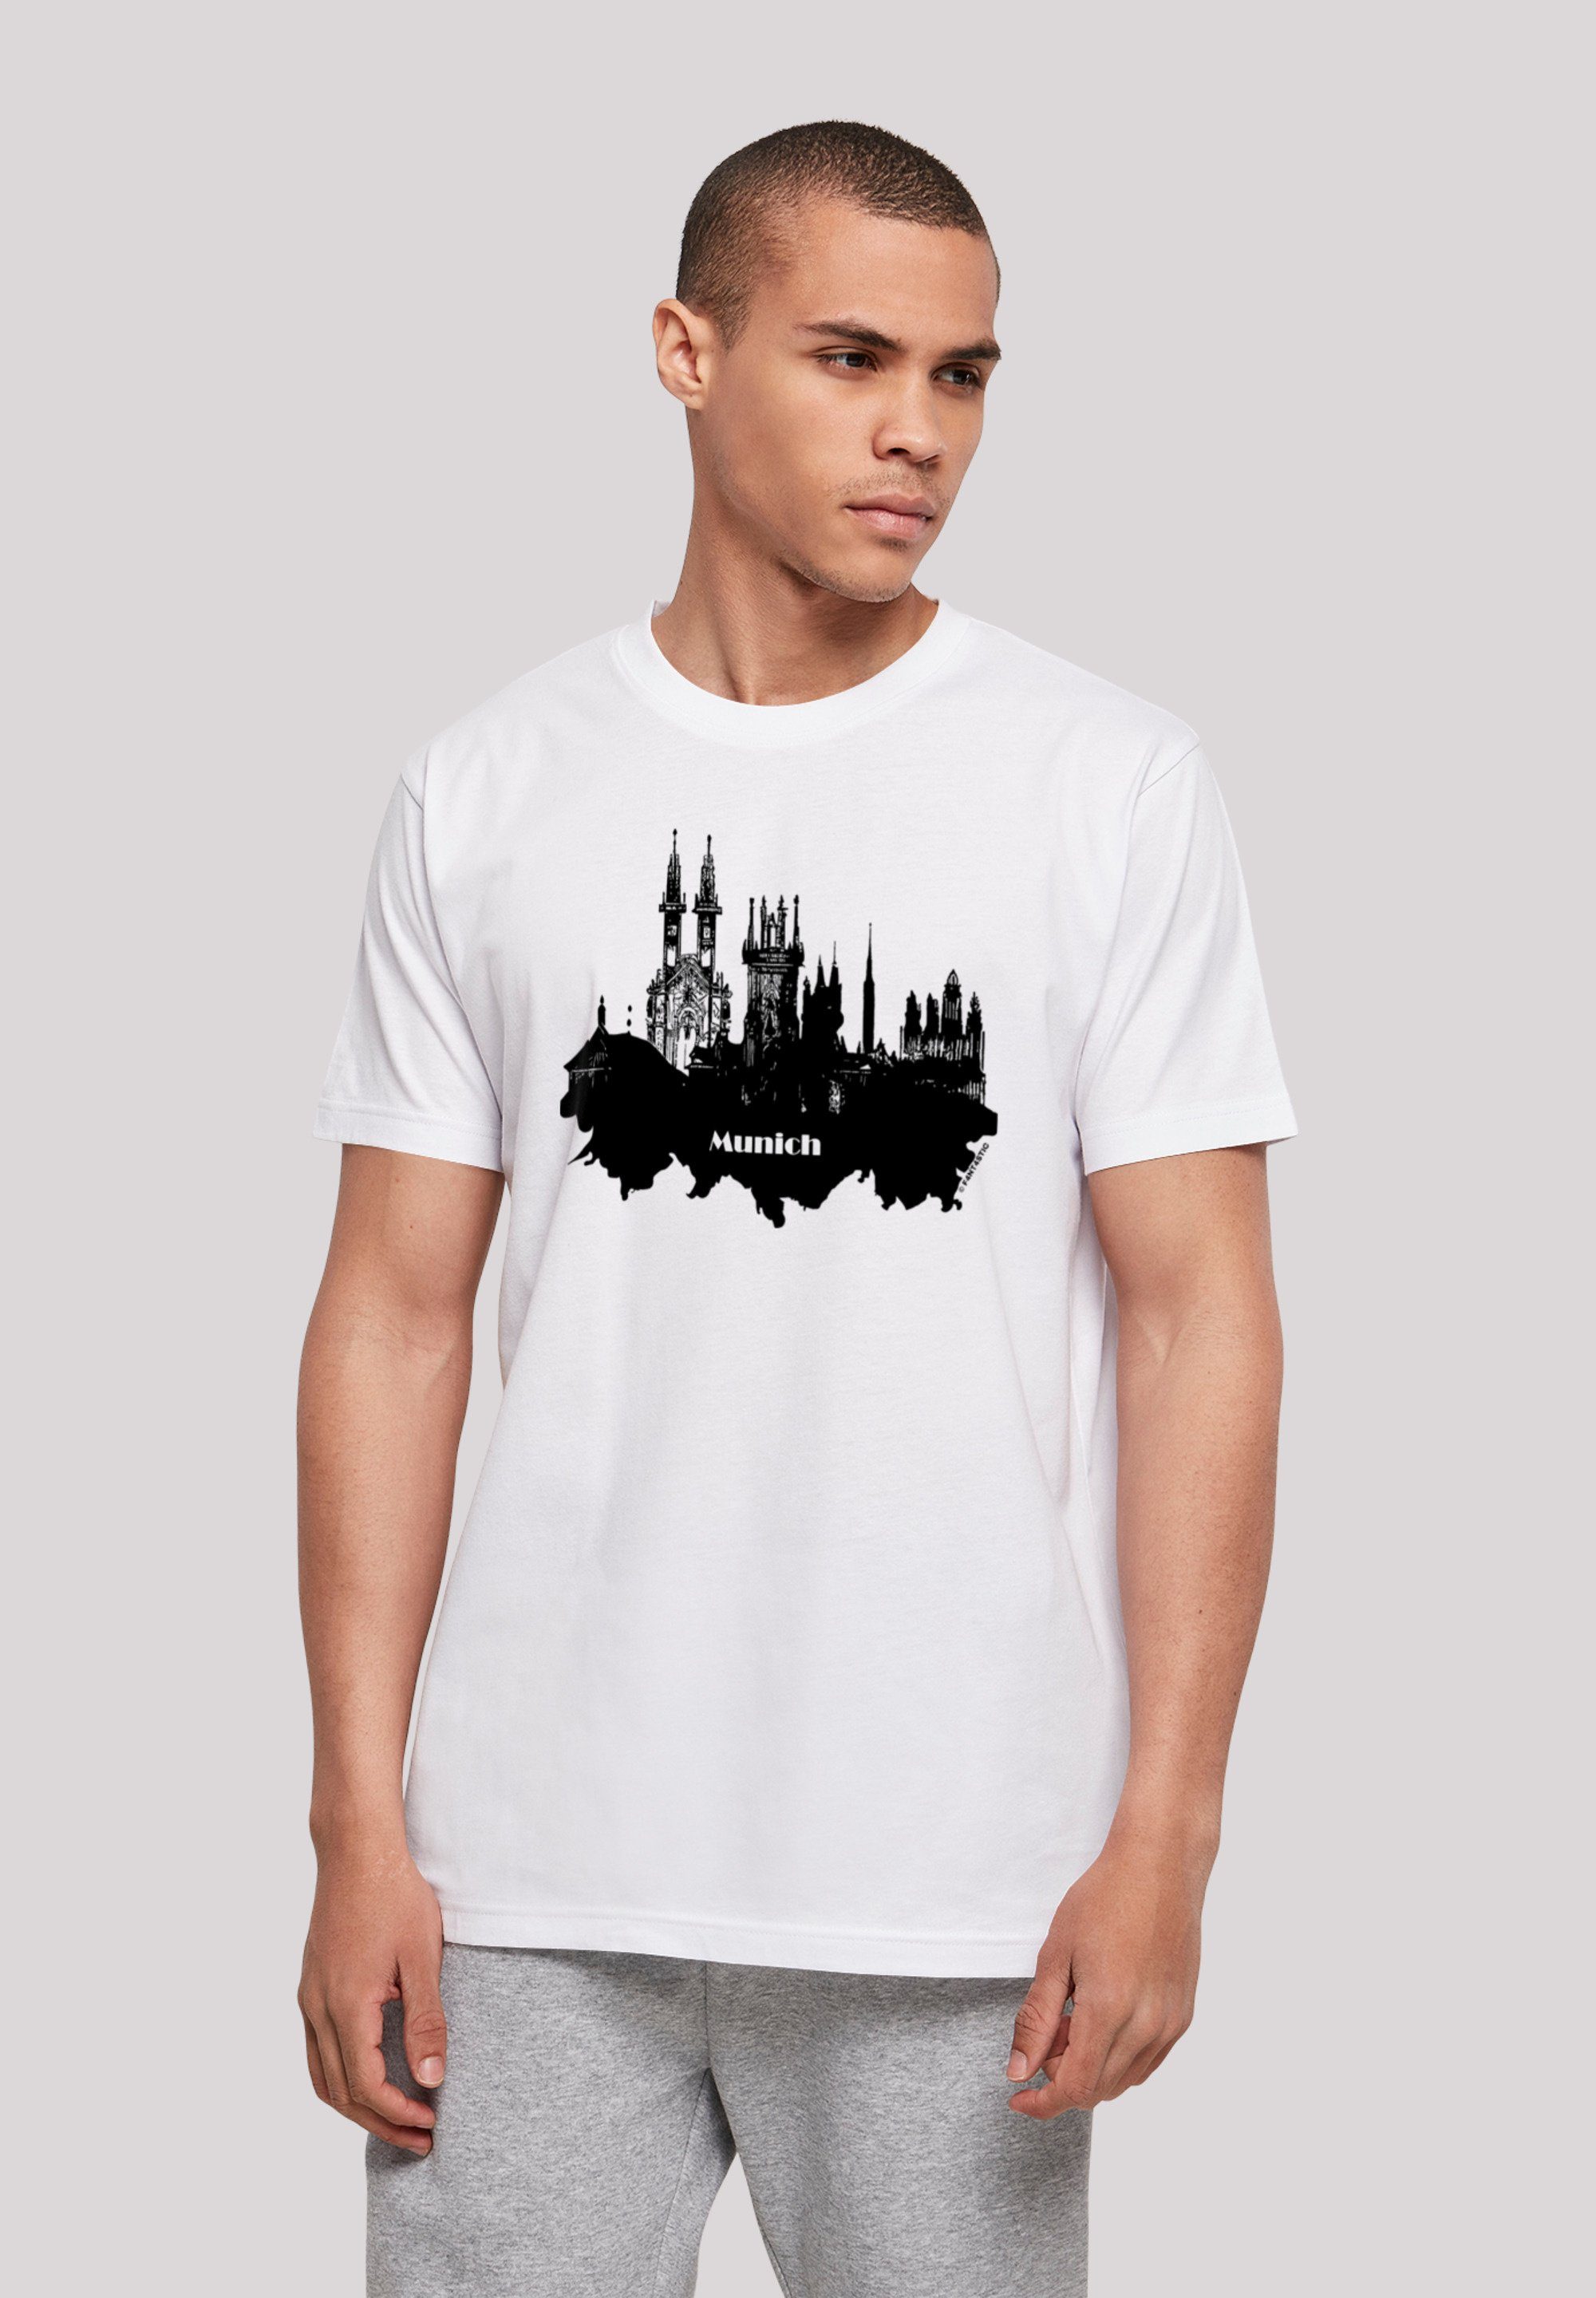 F4NT4STIC T-Shirt Cities Collection - Munich skyline Print, Rippbündchen am  Hals und Doppelnähte am Saum